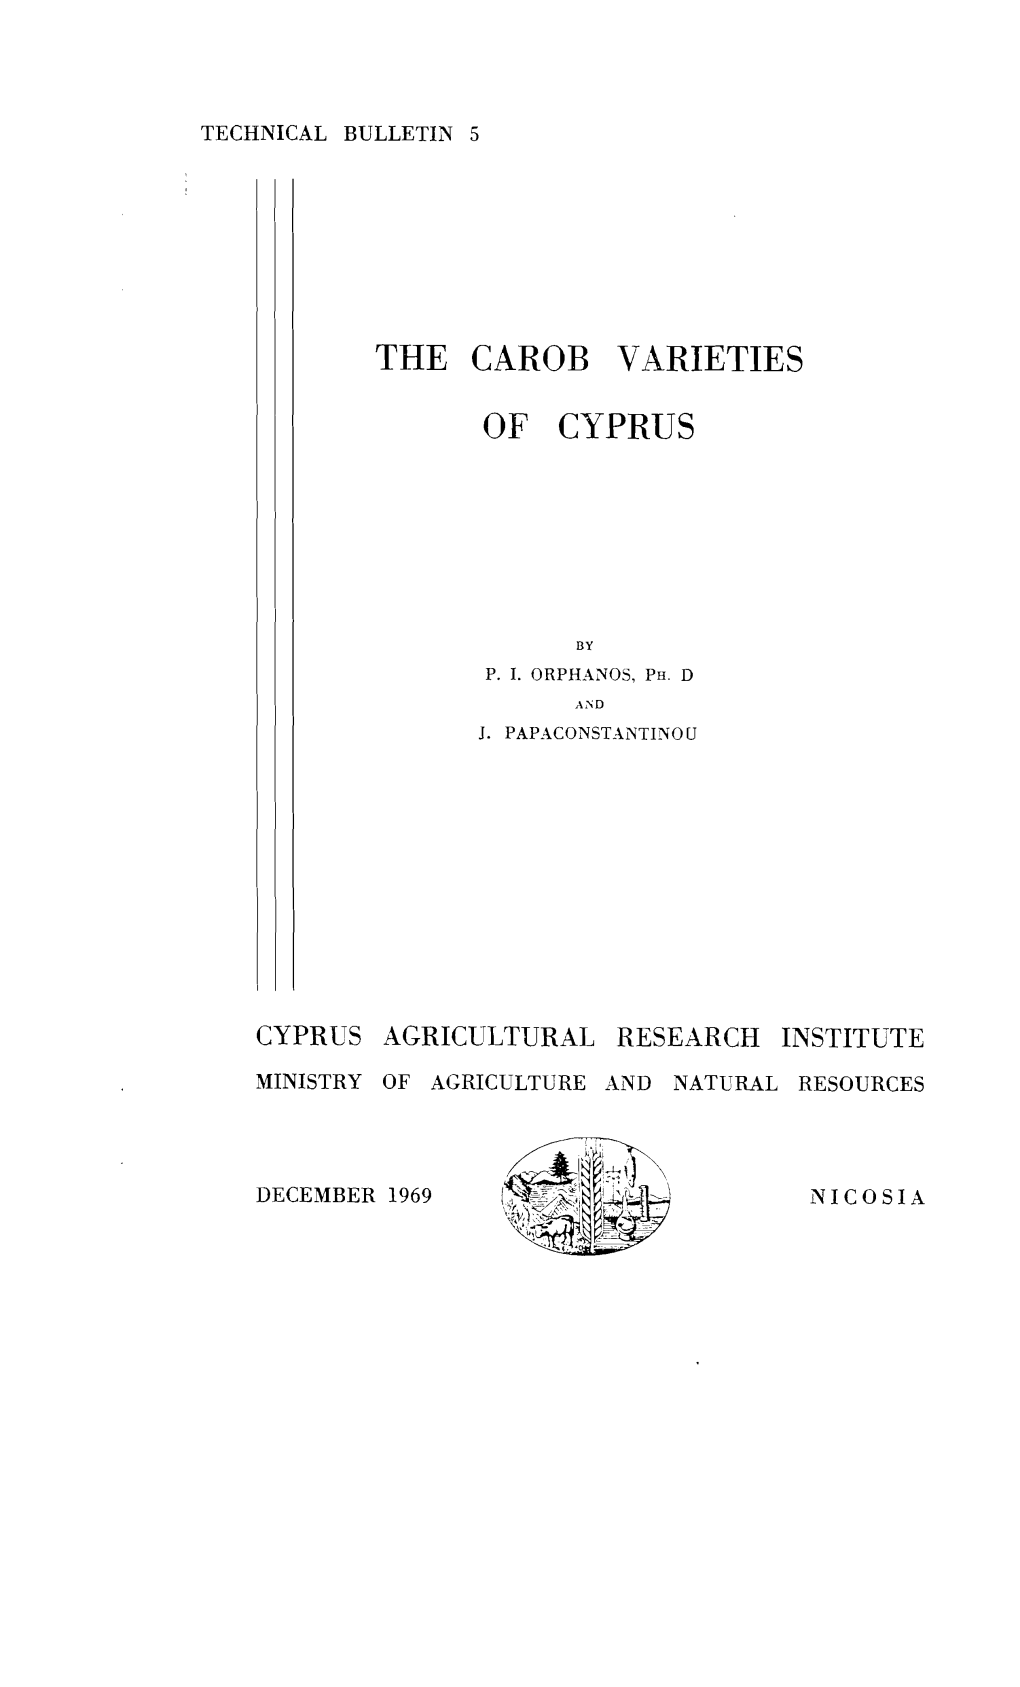 The Carob Varieties of Cyprus